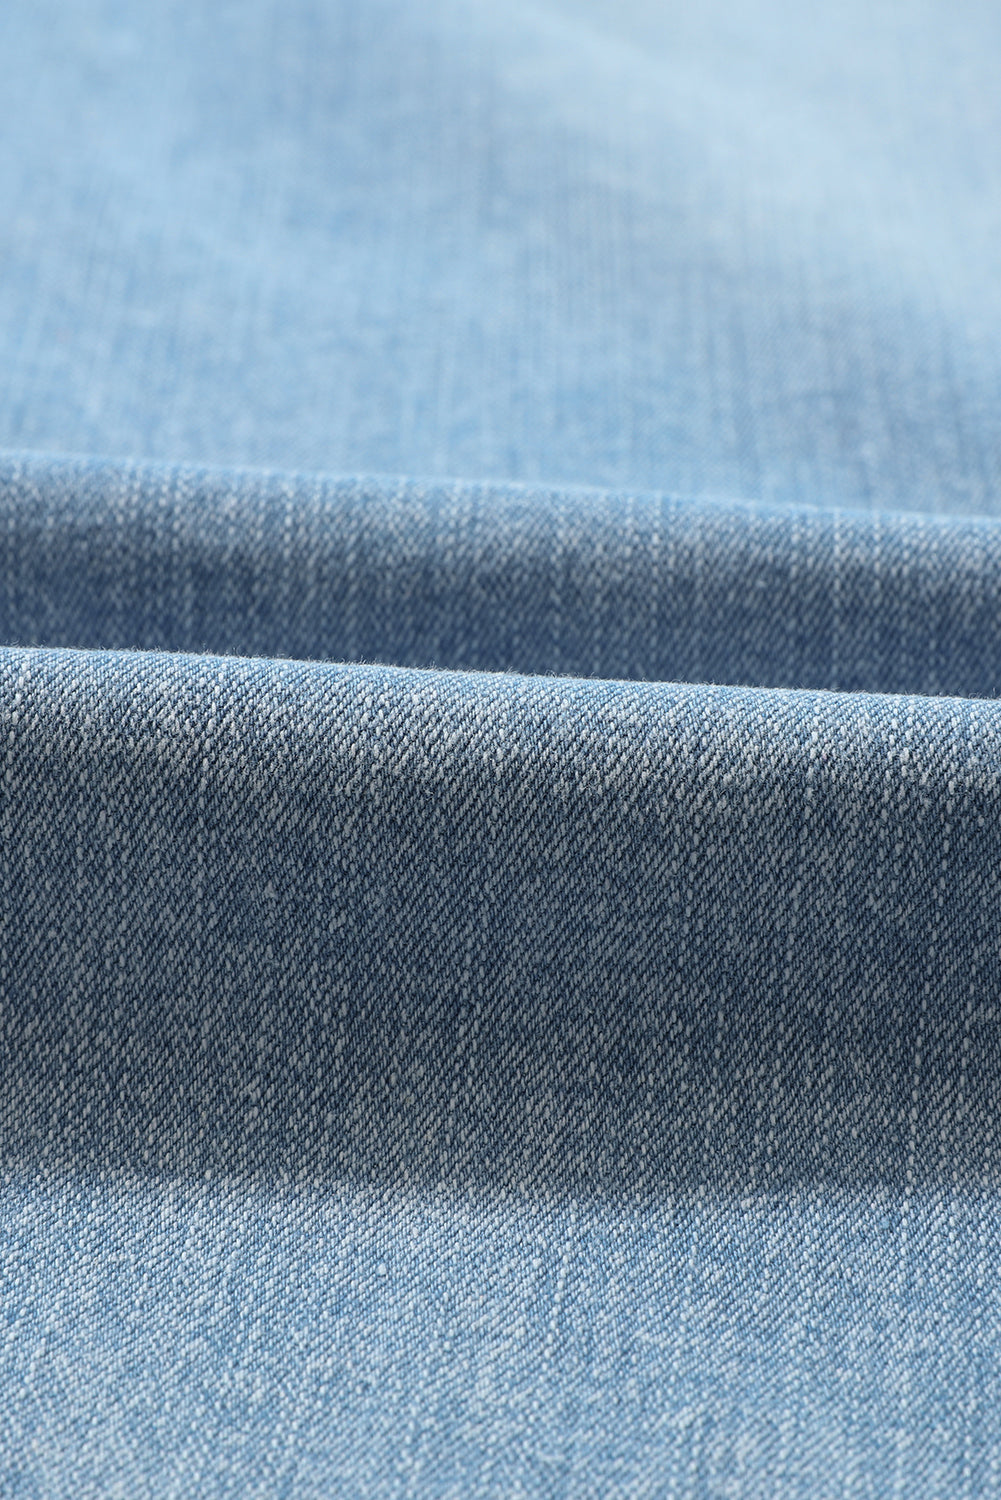 Plaid Patches Cotton Pocketed Denim Jeans